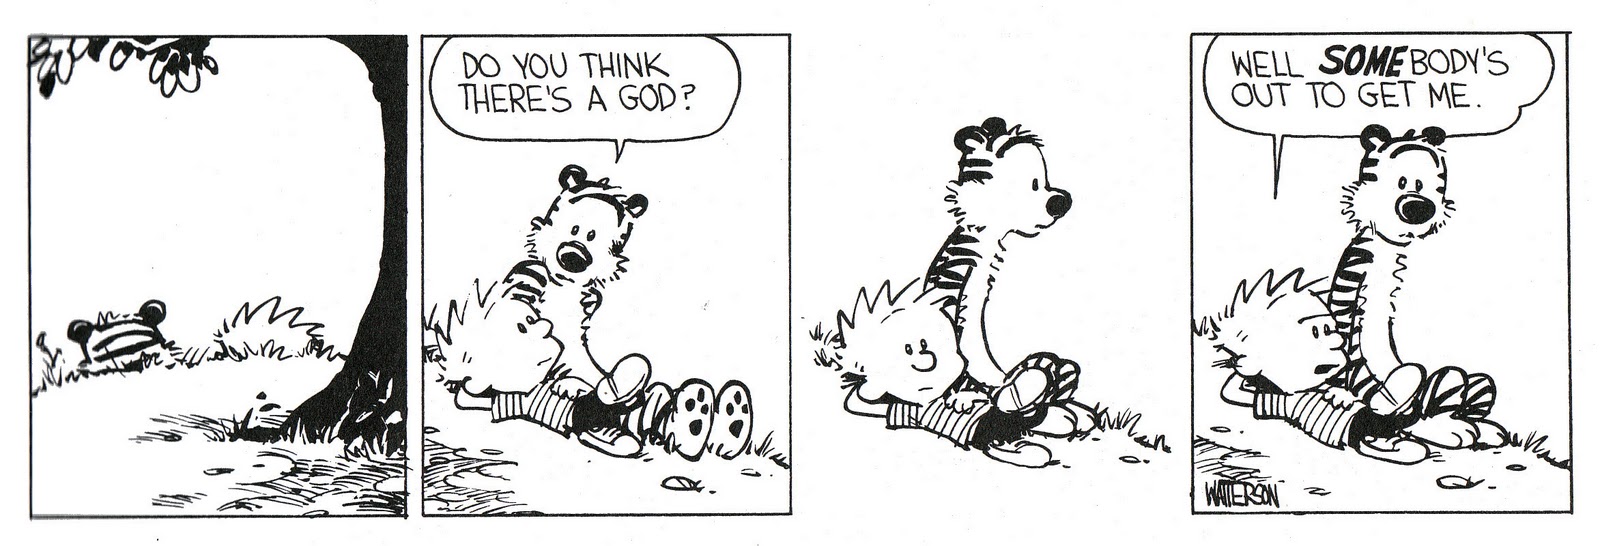 Calvin and hobbes facial expressions